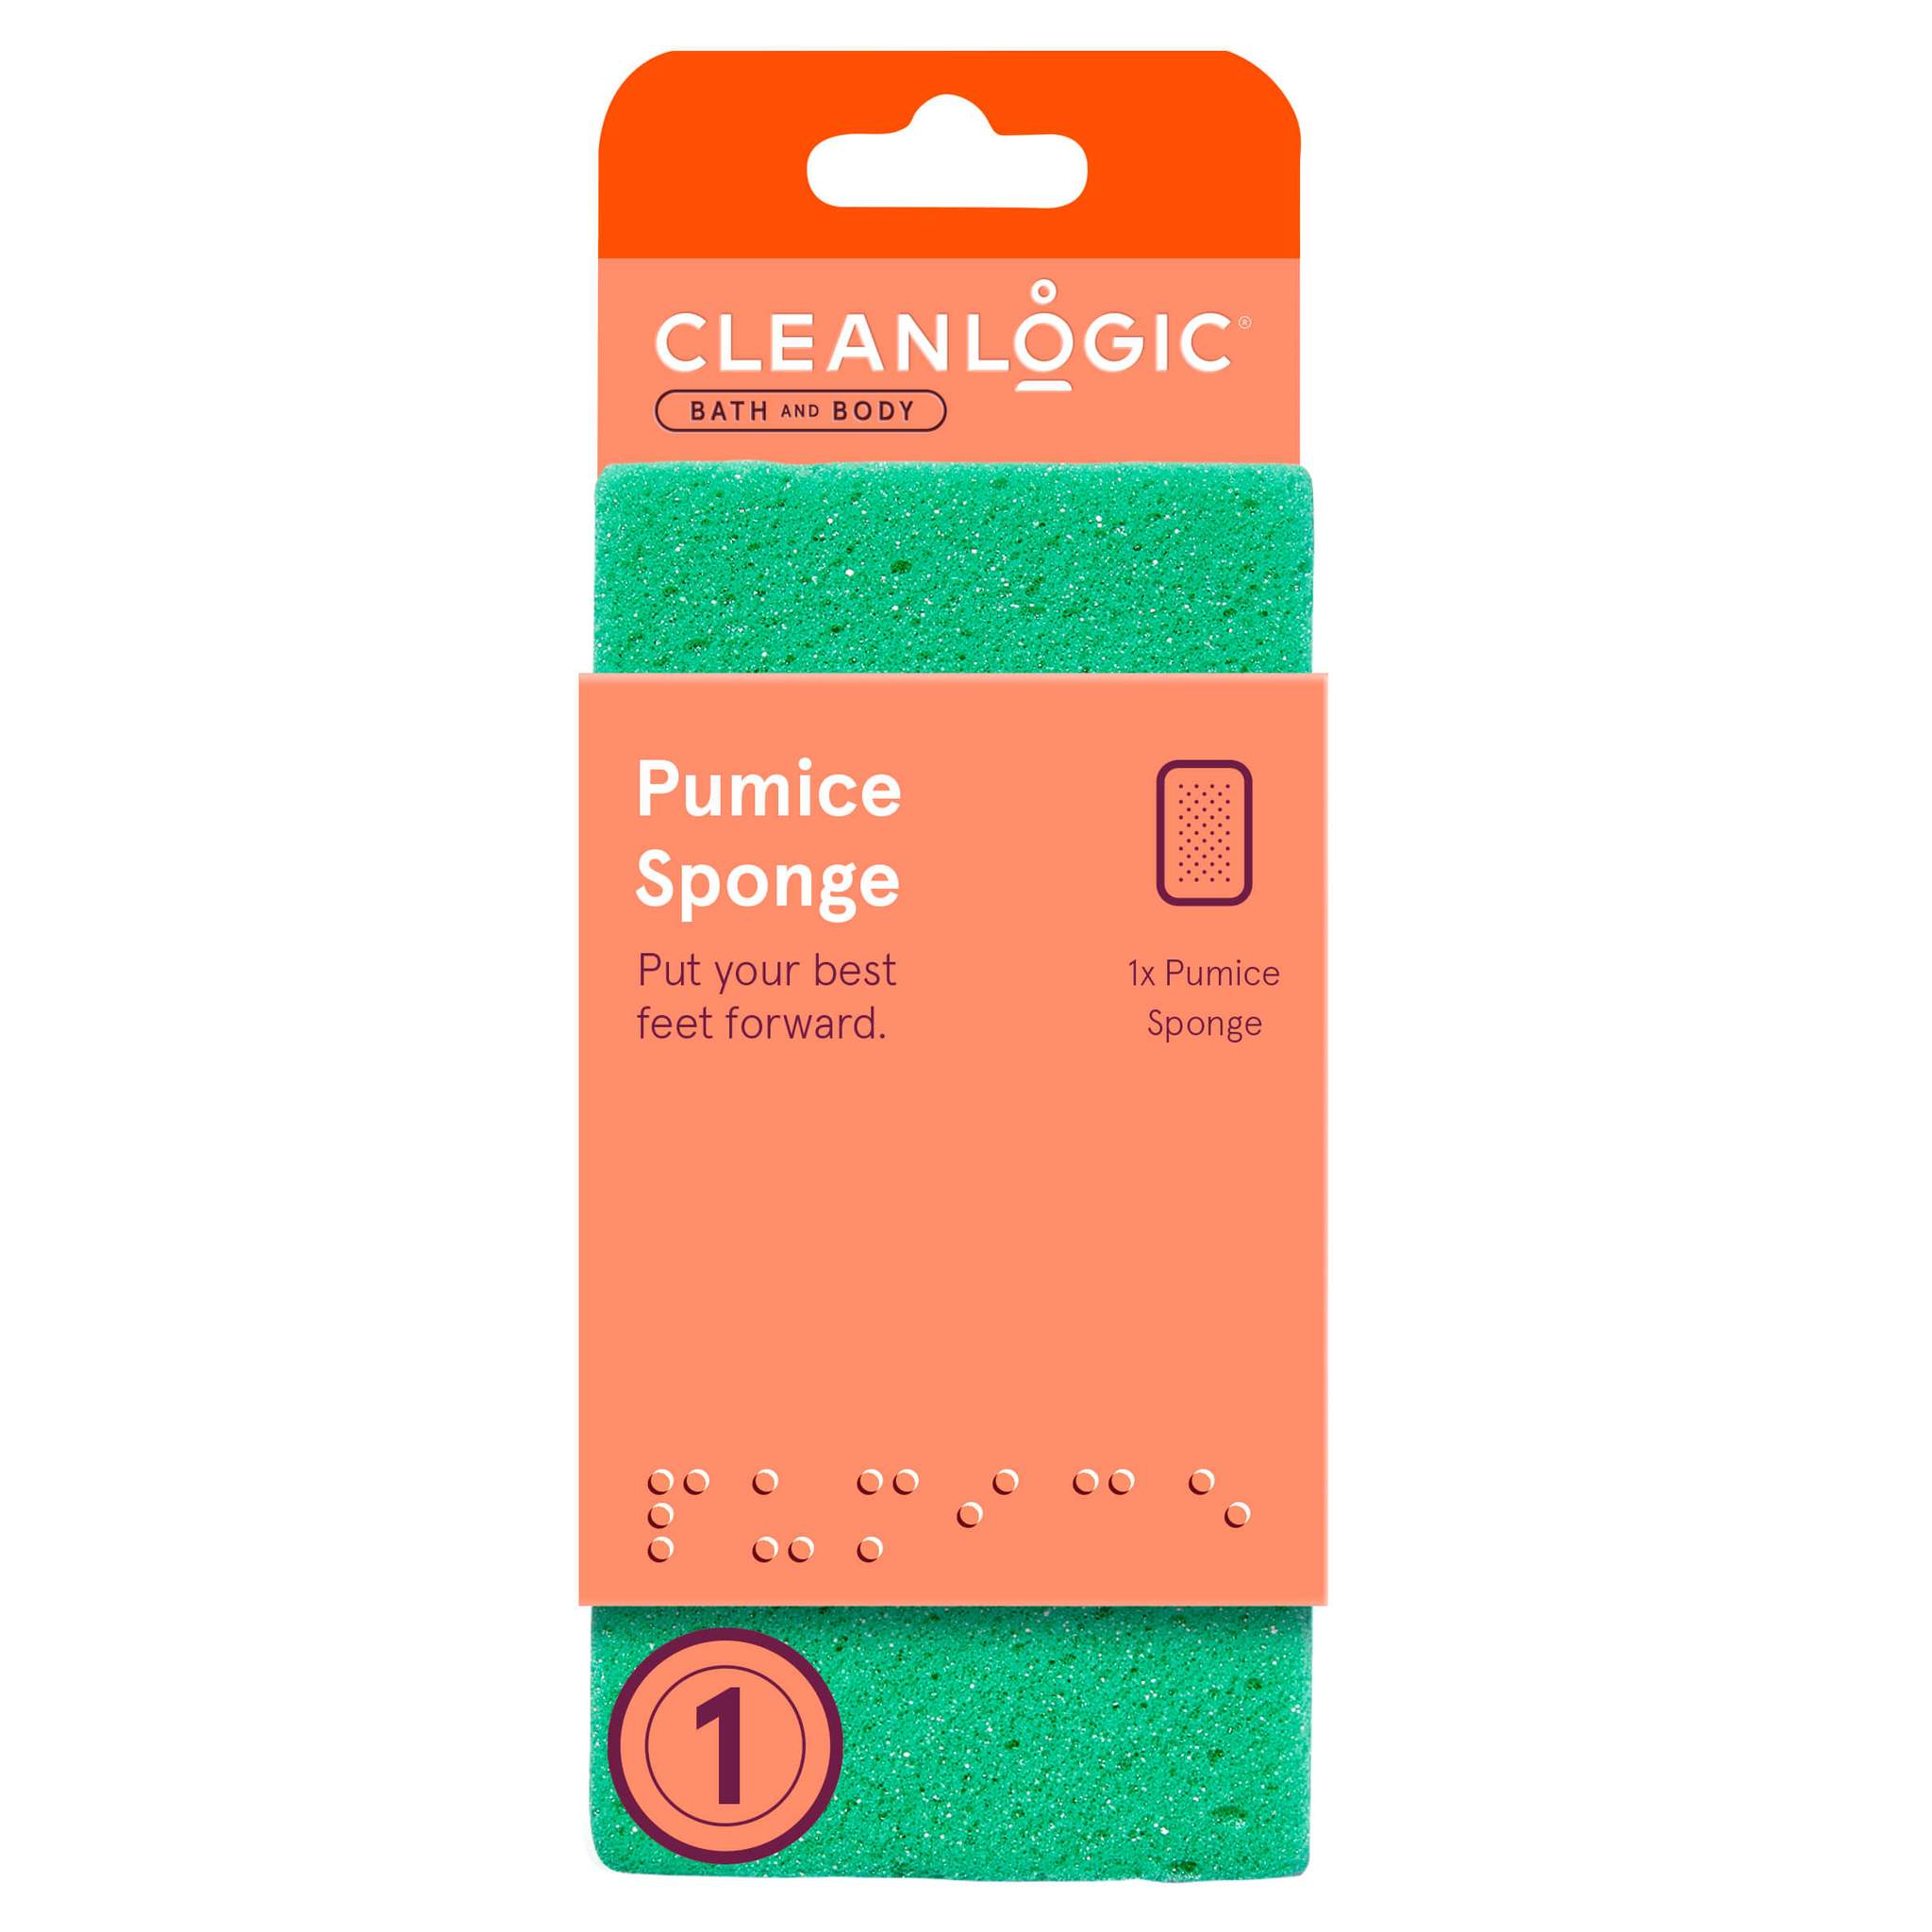 Cleanlogic Bath & Body Pumice Sponge